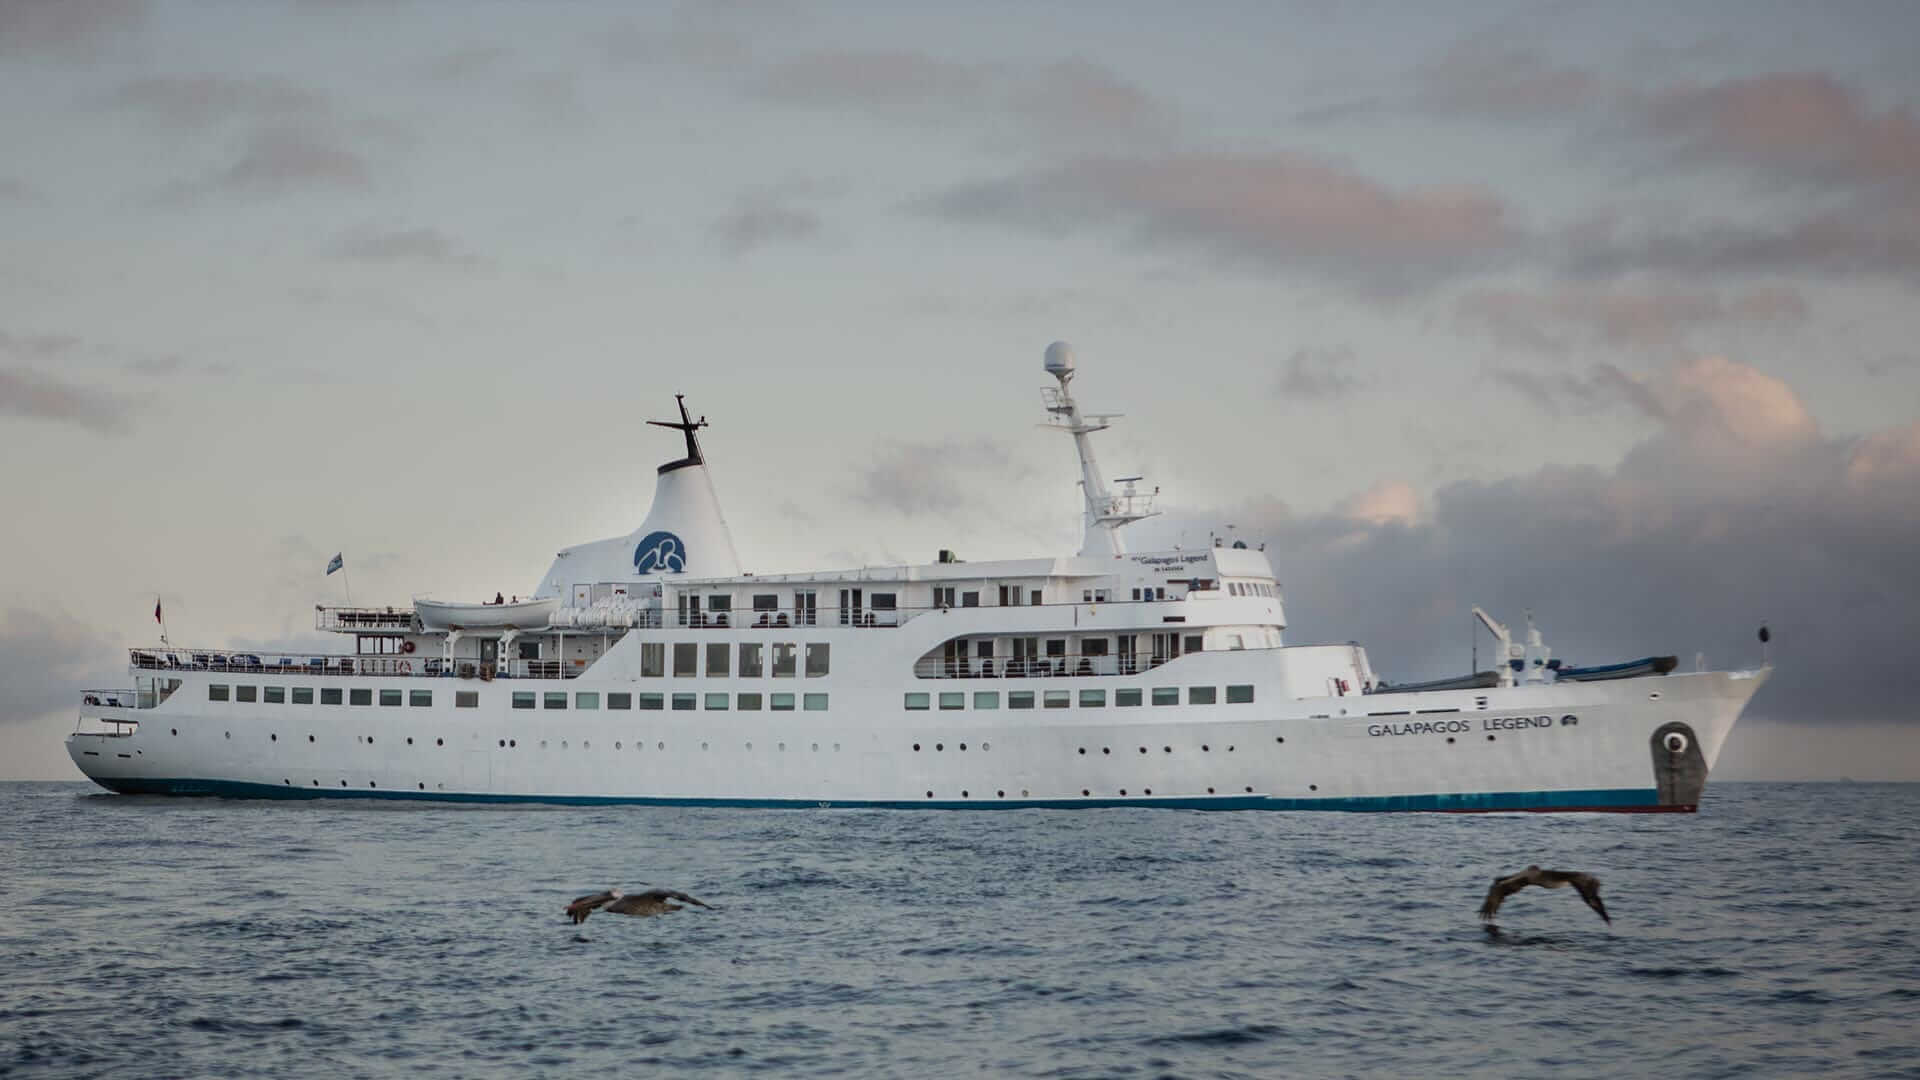 Galapagos Legend Cruise Ship